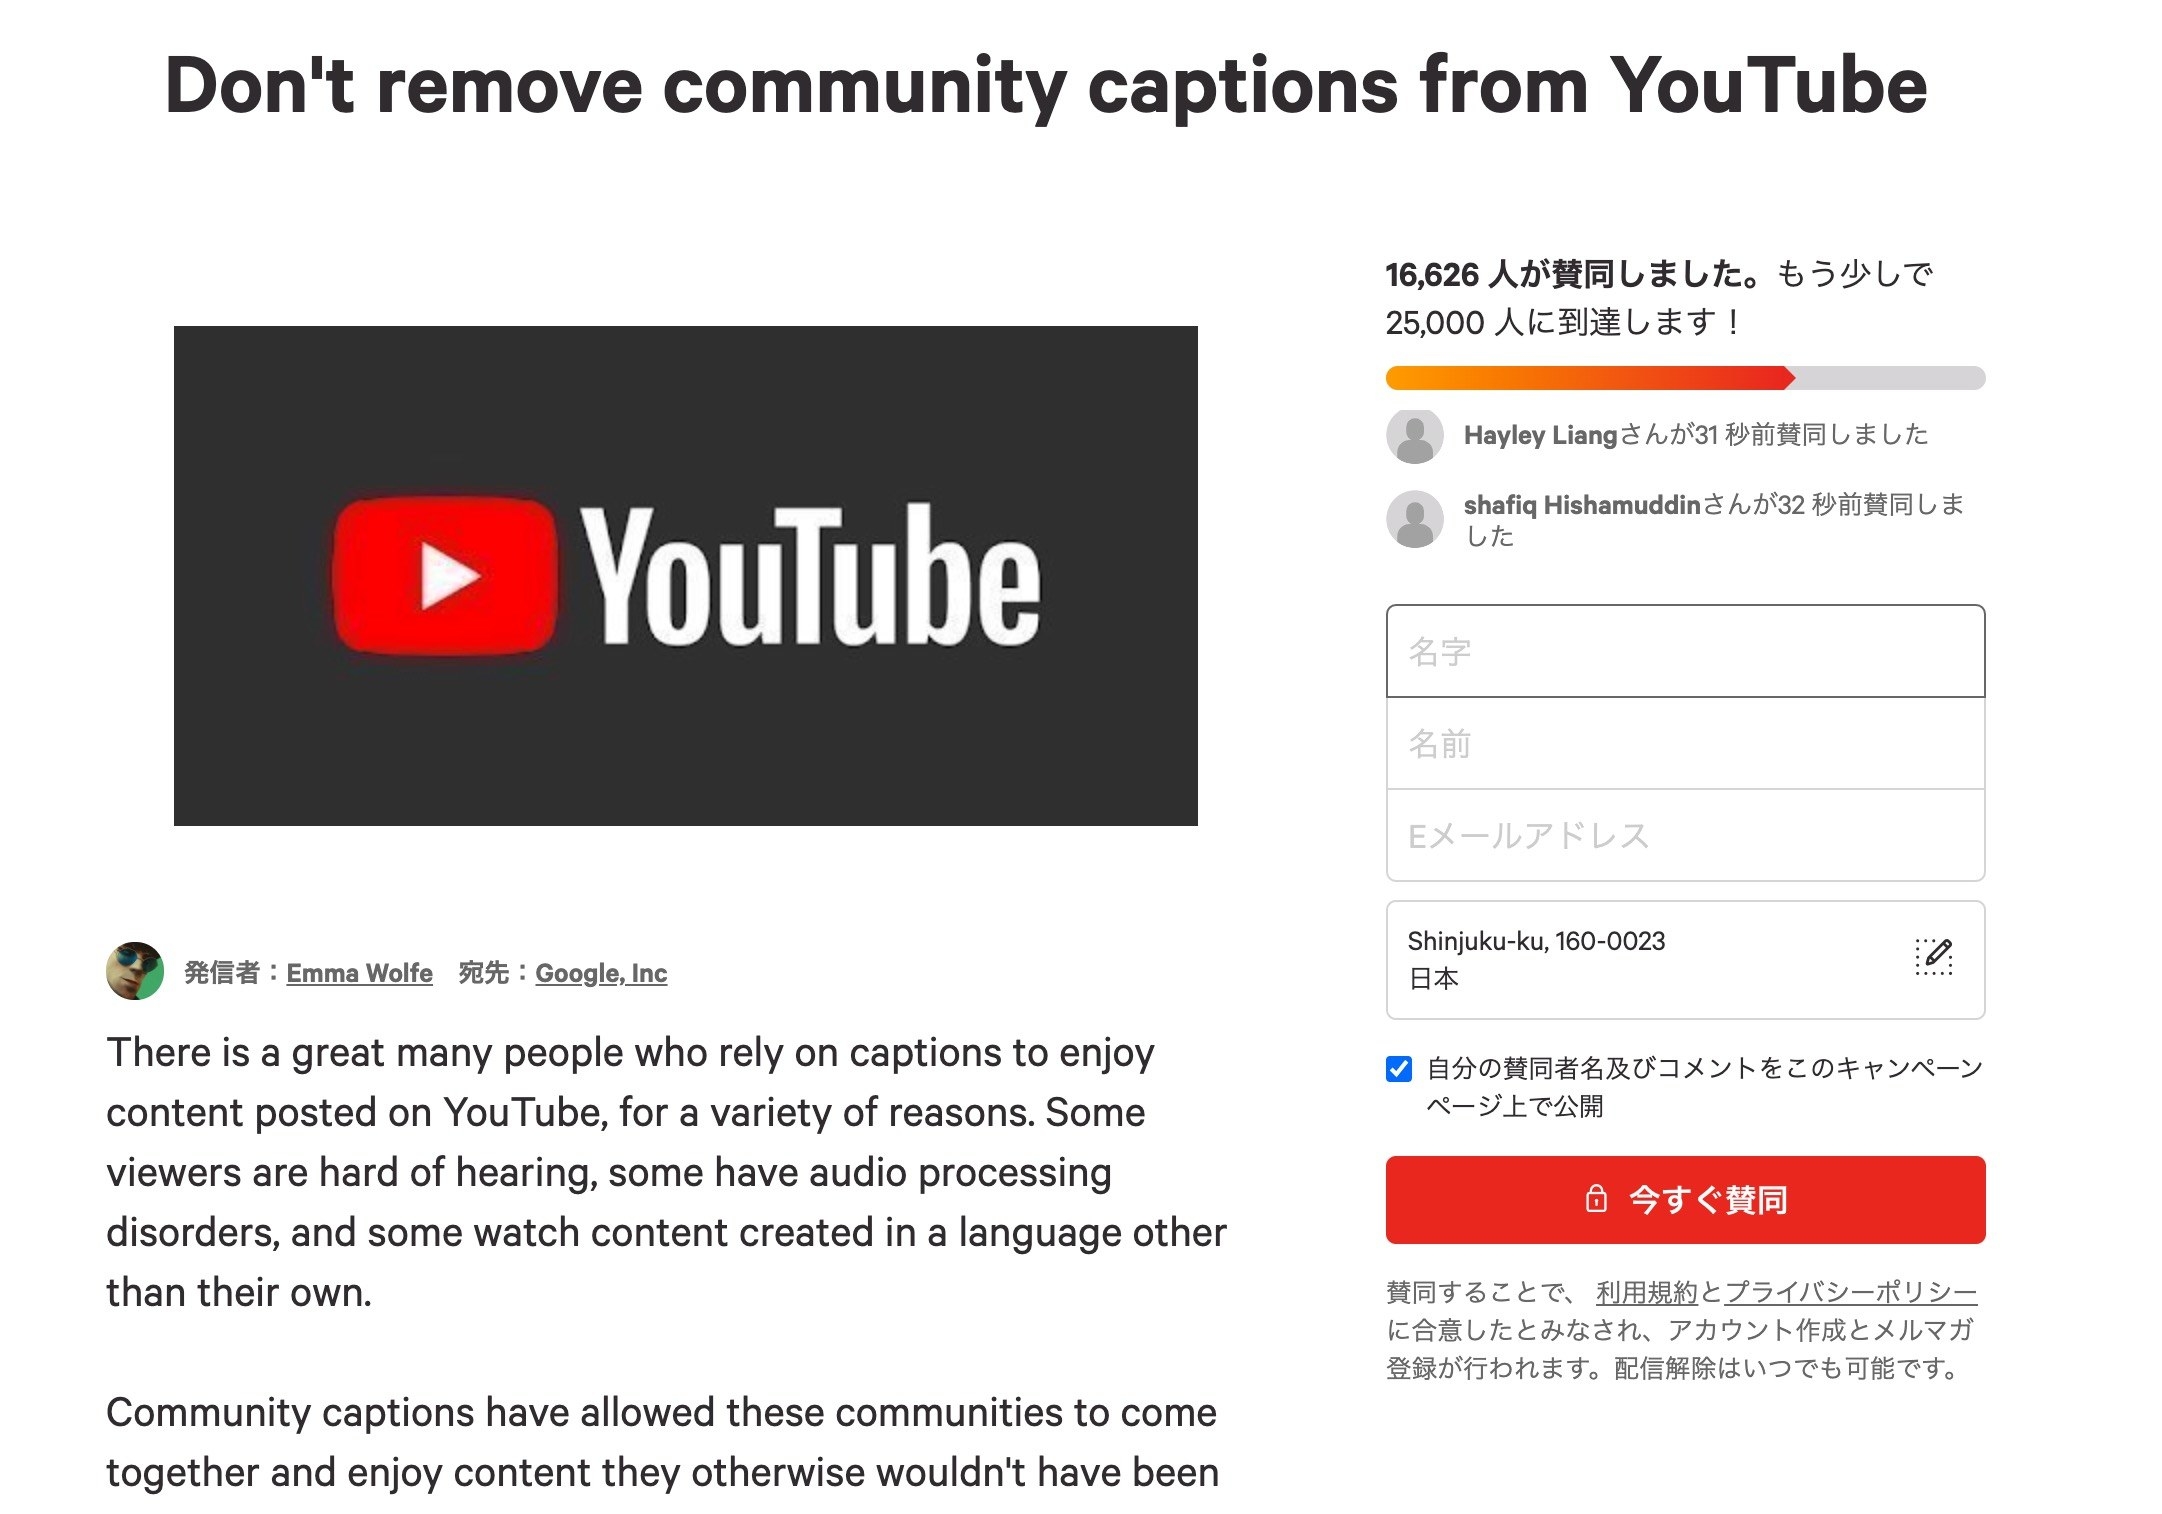 Youtube 視聴者による字幕翻訳機能を9月に終了 国内外で反発広がる